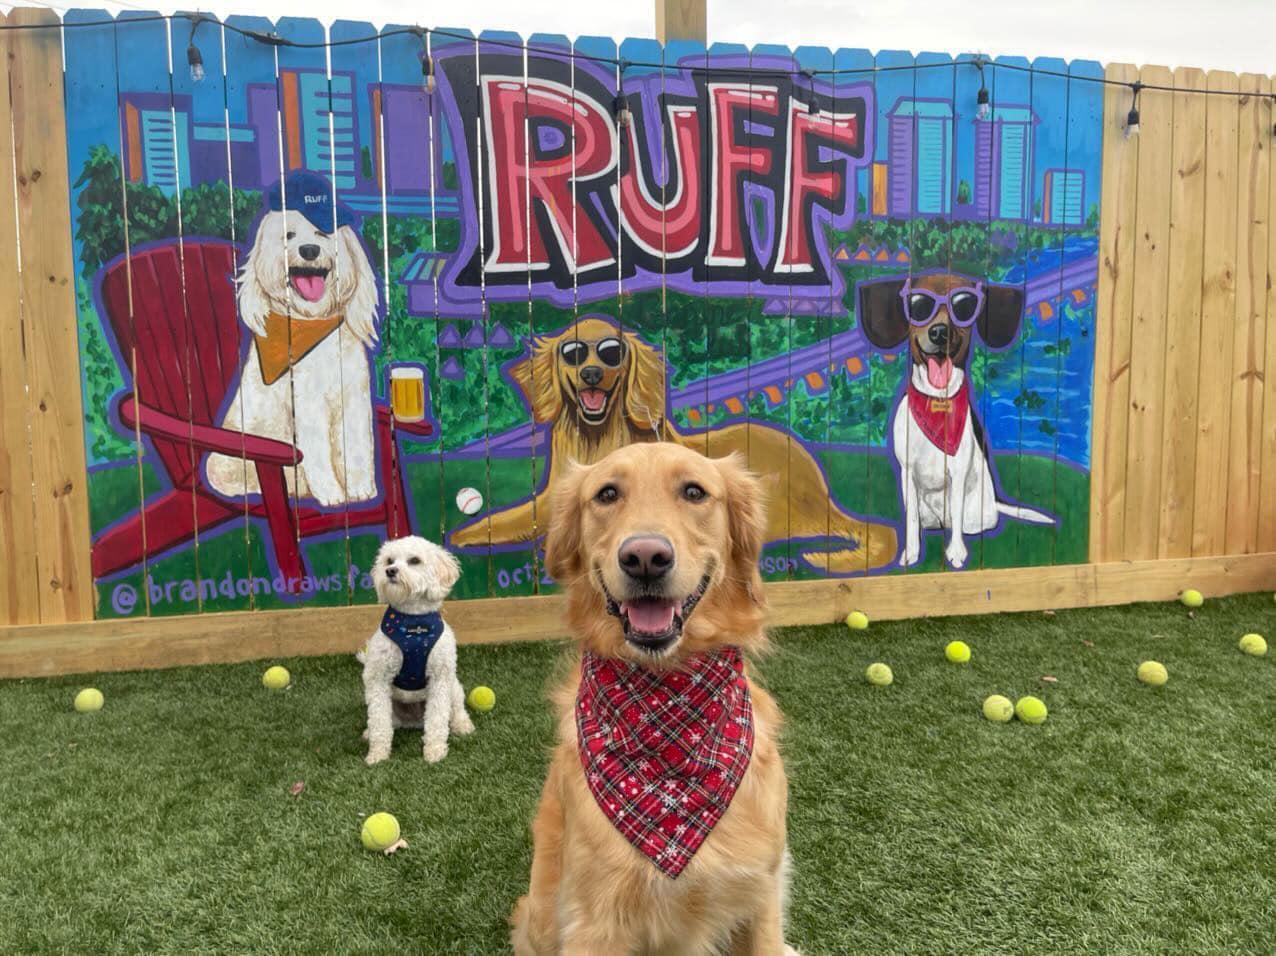 Pet Friendly Ruff Canine Club